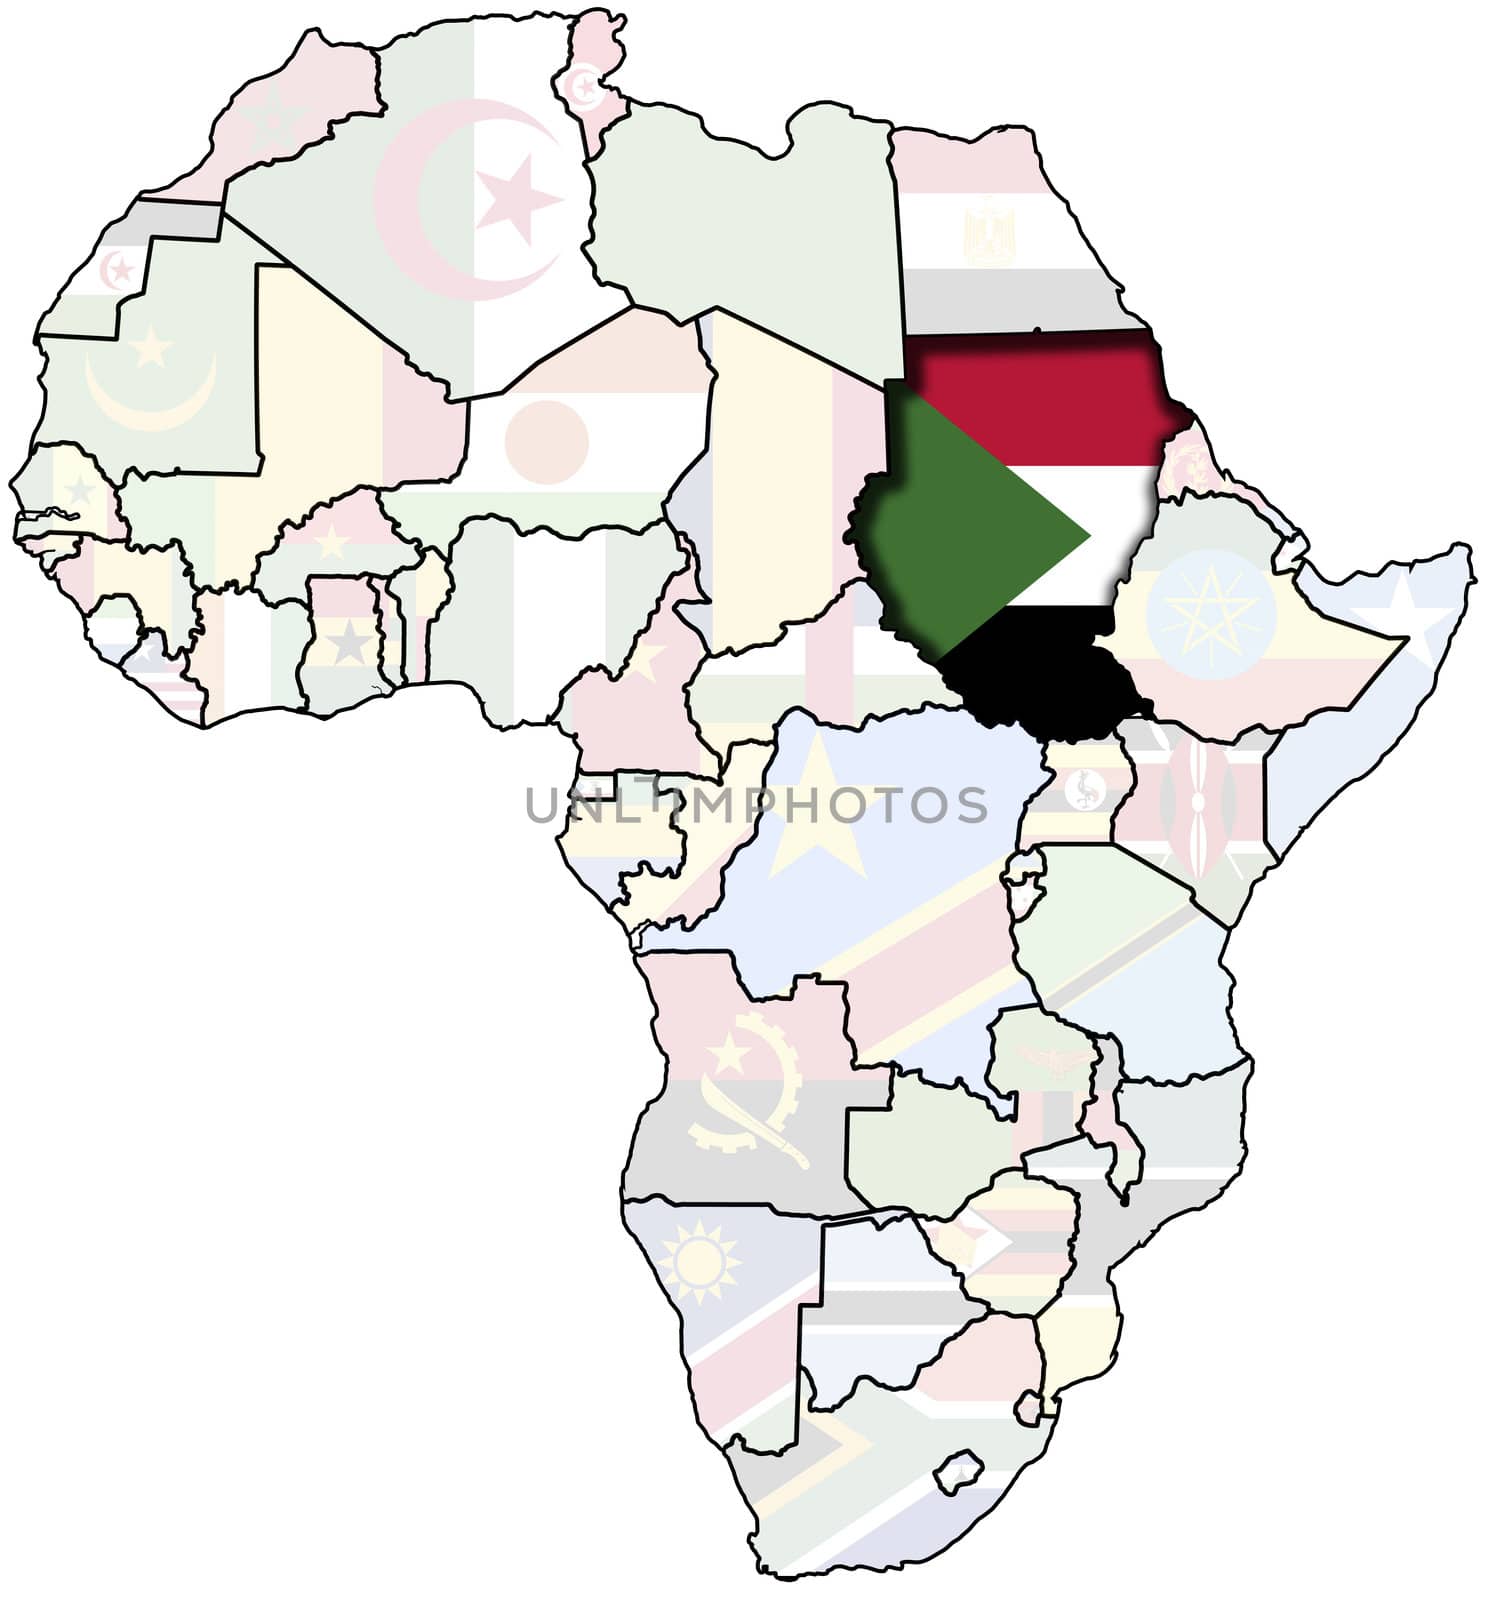 flag of sudan on africa map